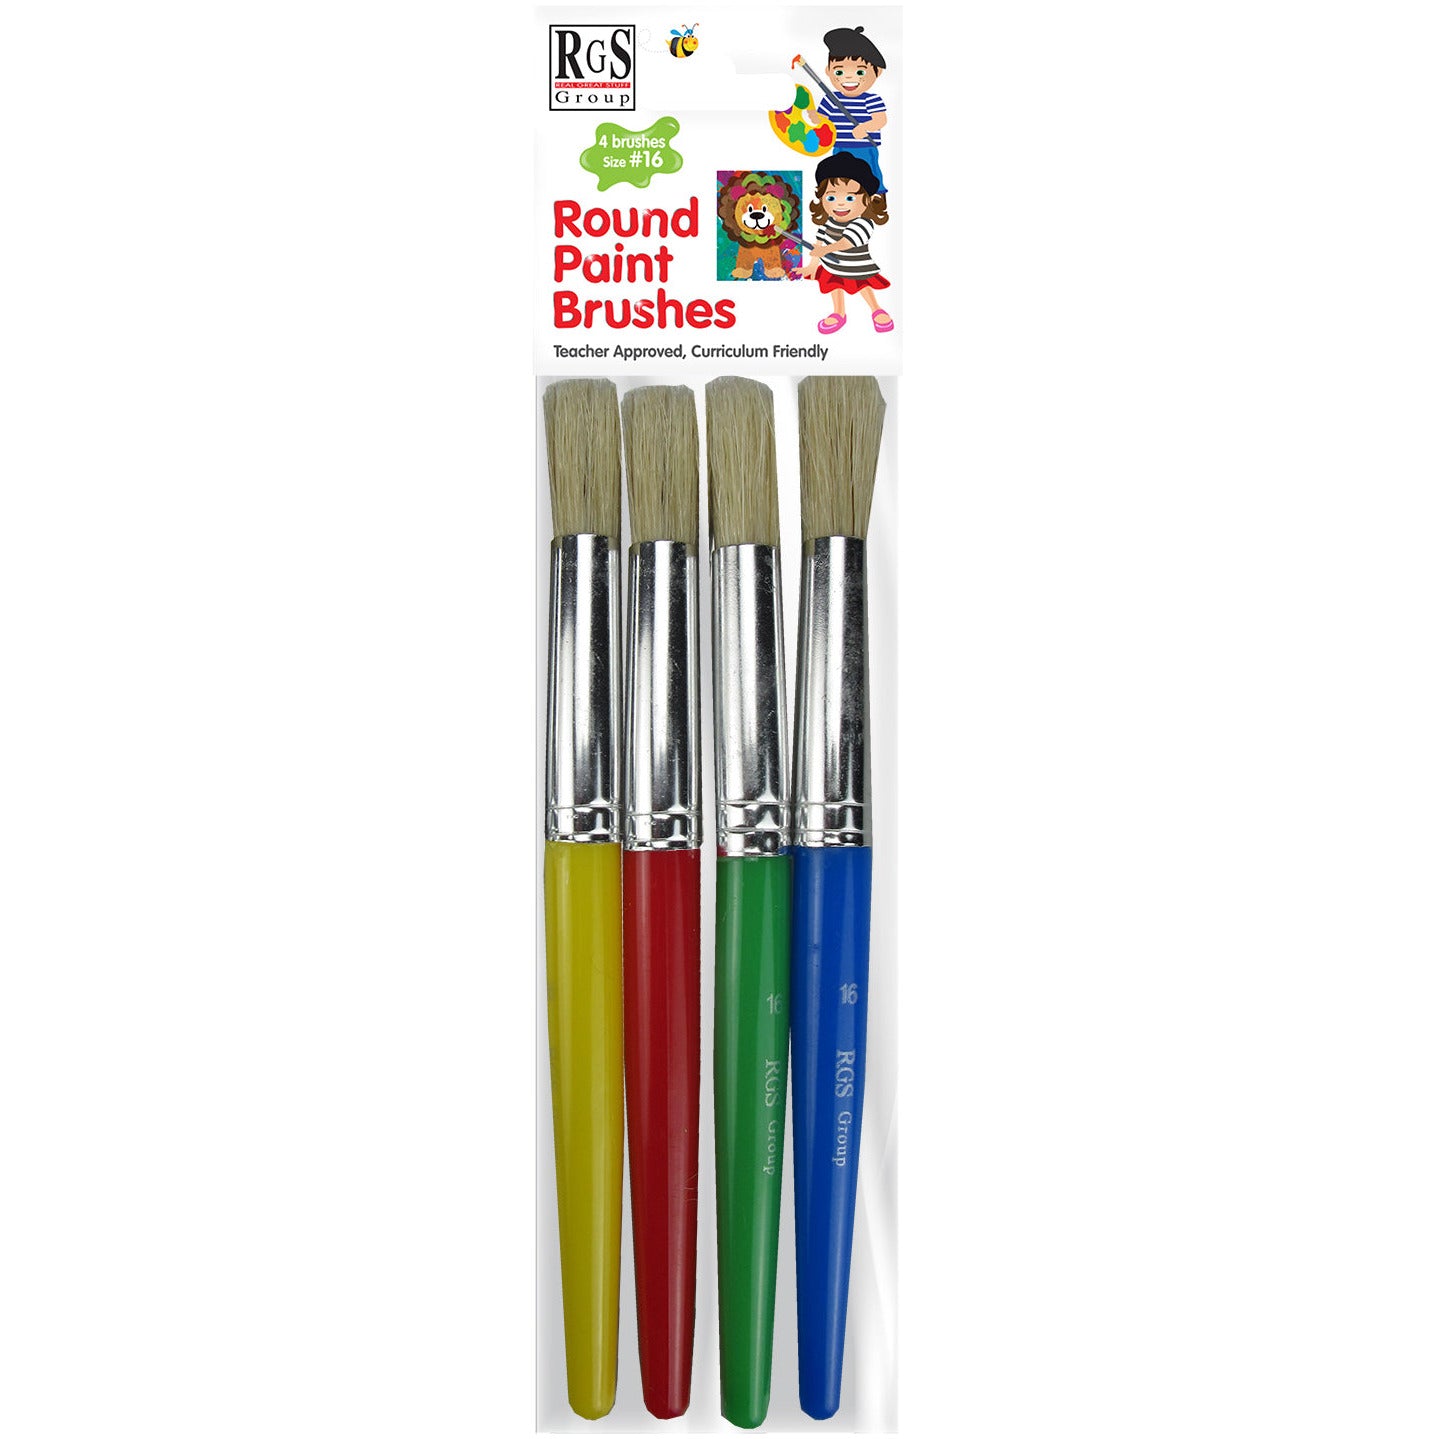 Round Paintbrushes #16 (4 Pack)